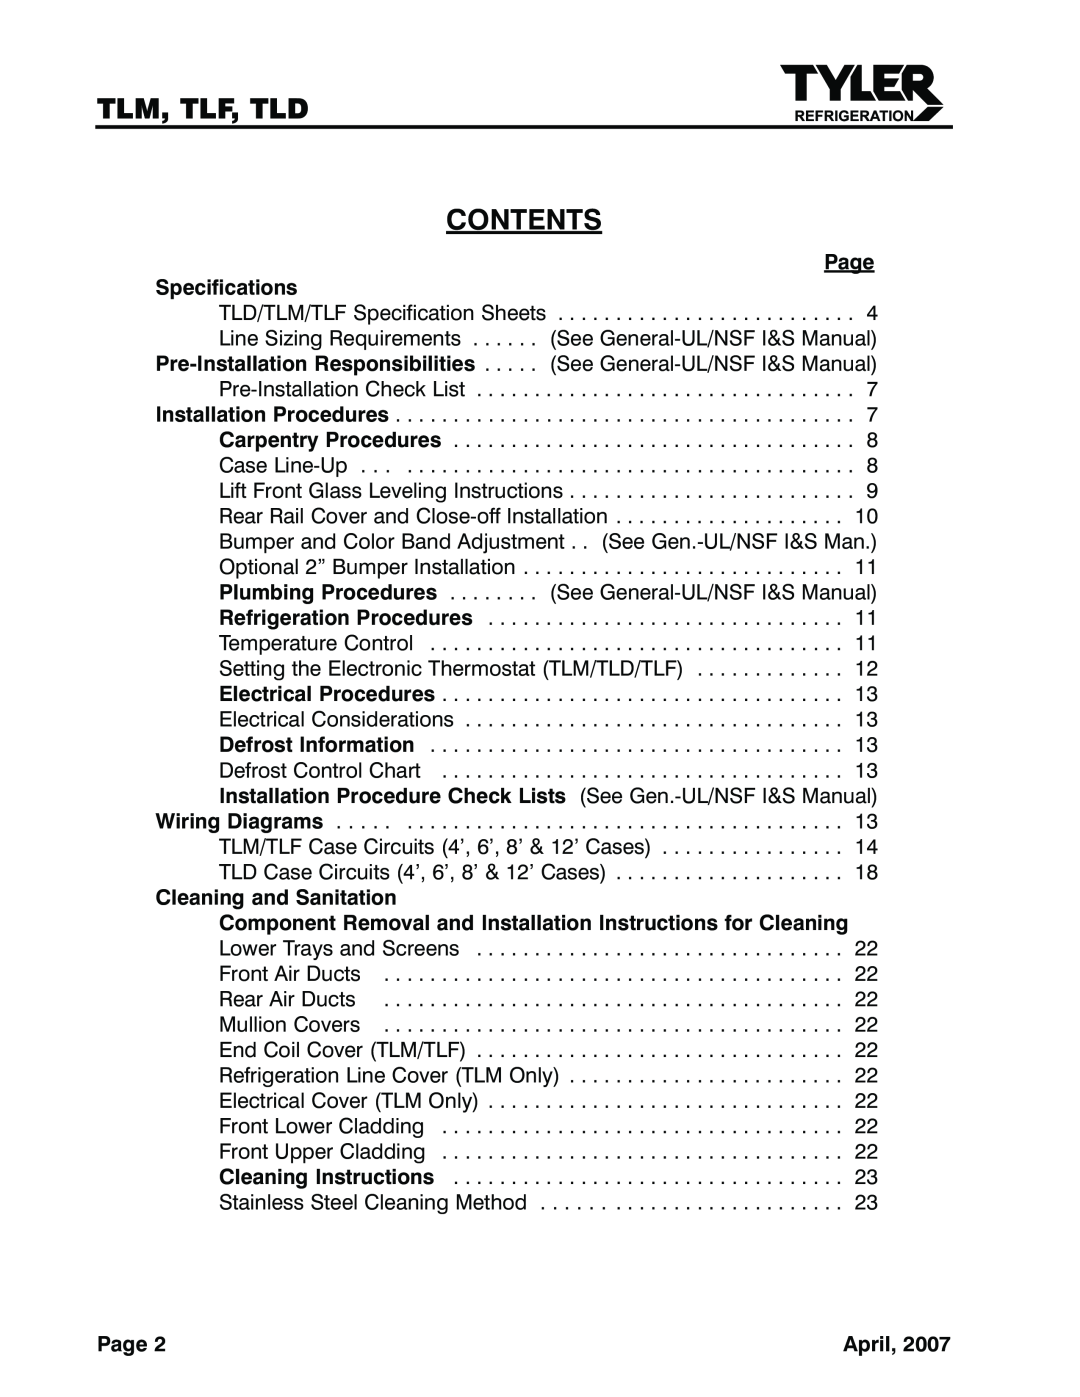 Tyler Refrigeration TLM, TLF, TLD service manual Tlm, Tlf, Tld, Contents 